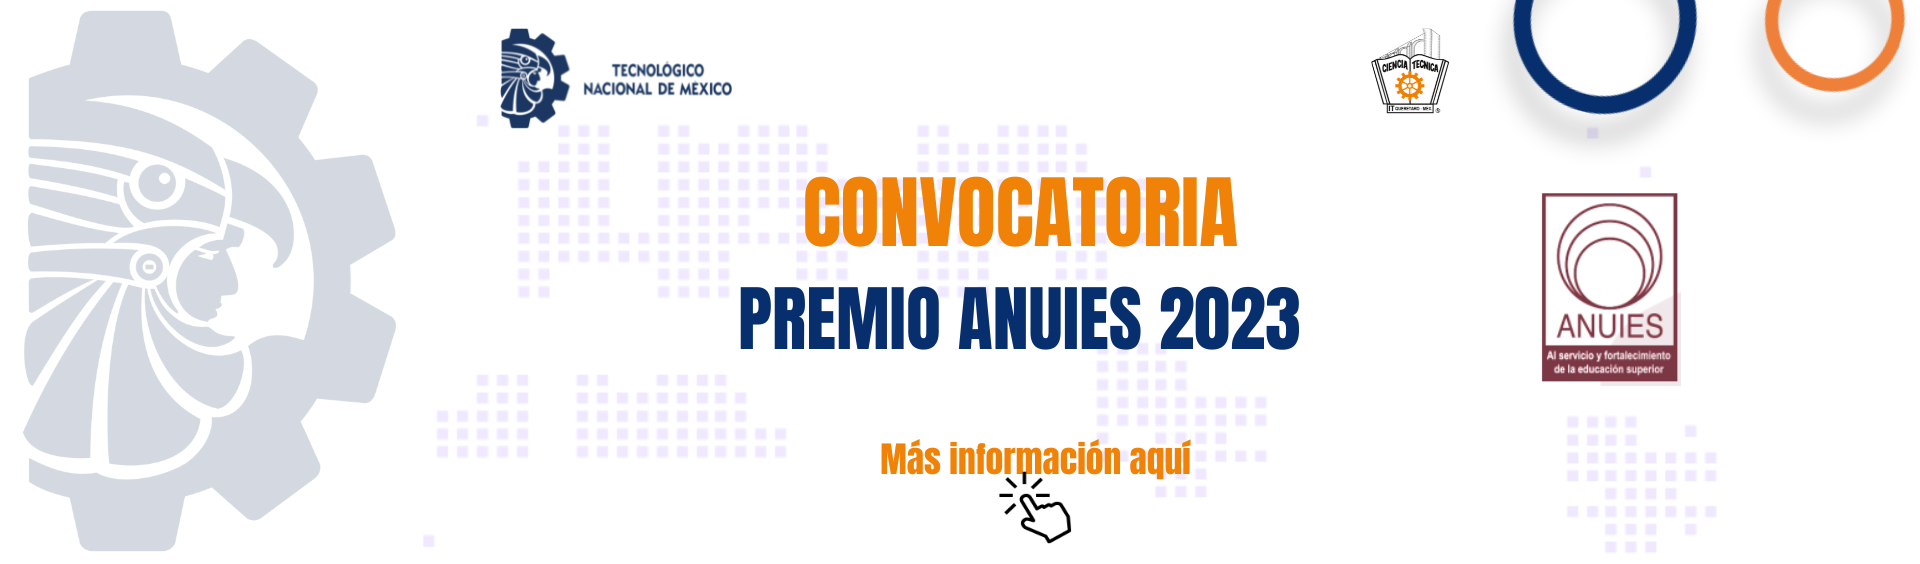 CONVOCATORIA PREMIOS ANUIES 2023